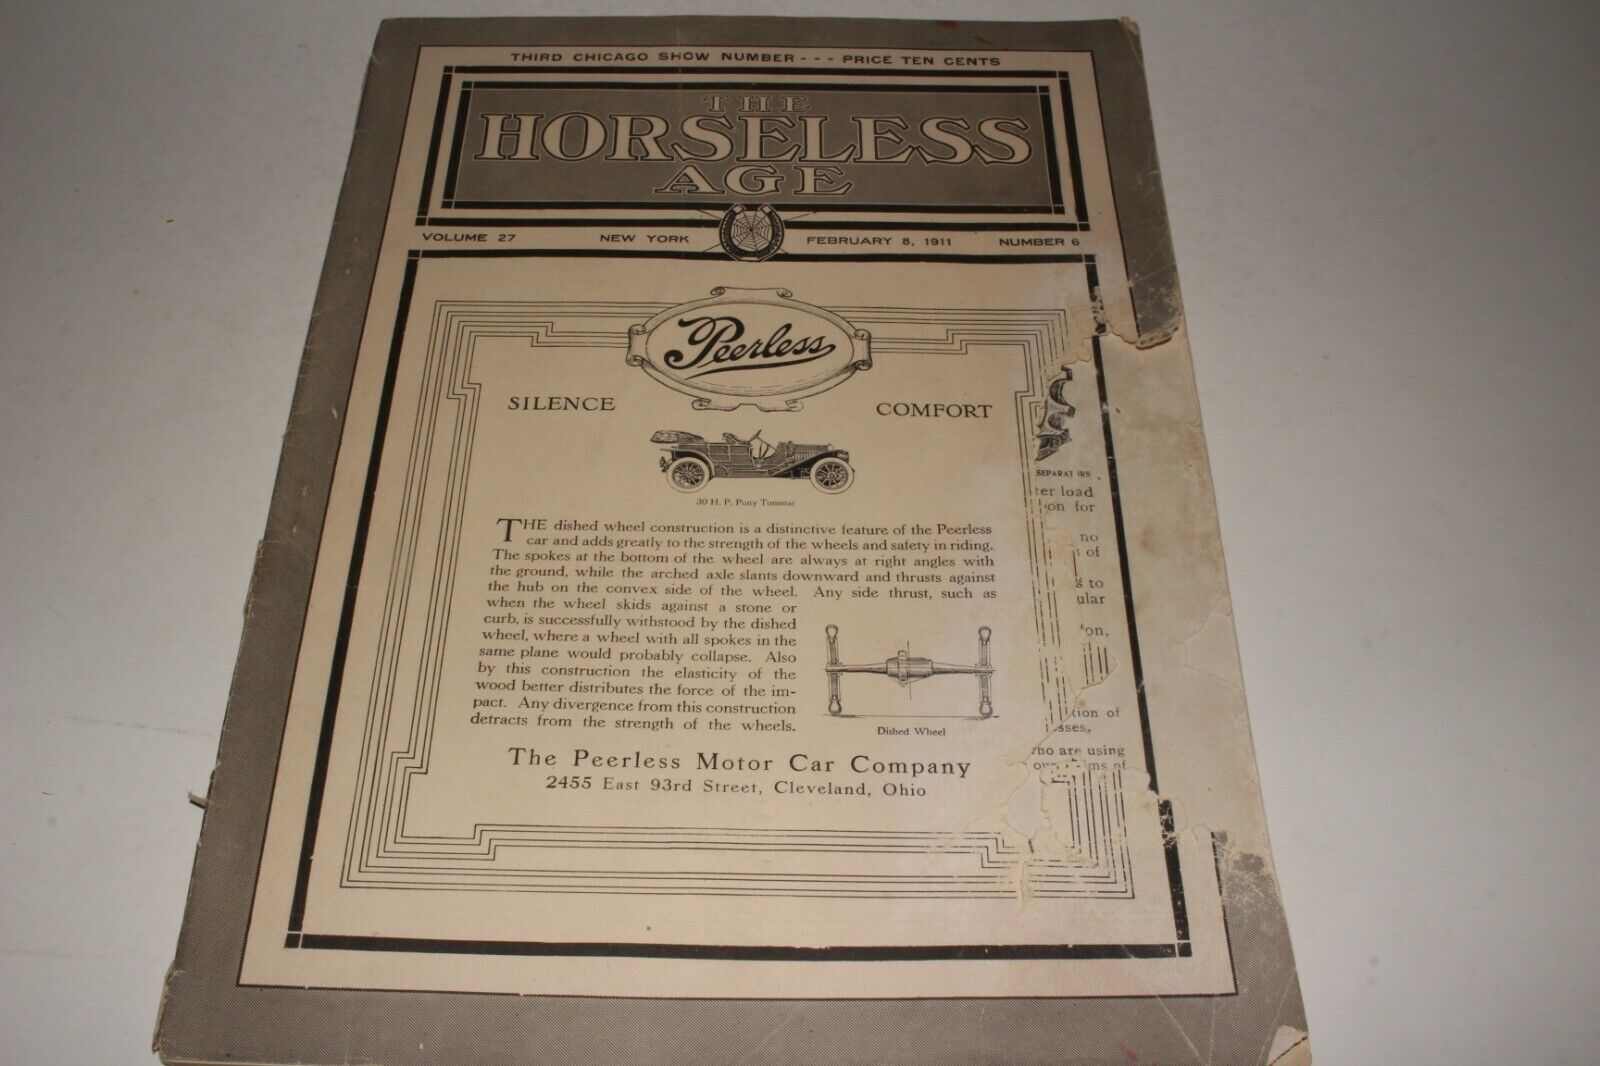 THE HORSELESS AGE MAGAZINE FEBRUARY 8, 1911, VOLUME 27, NUMBER 6